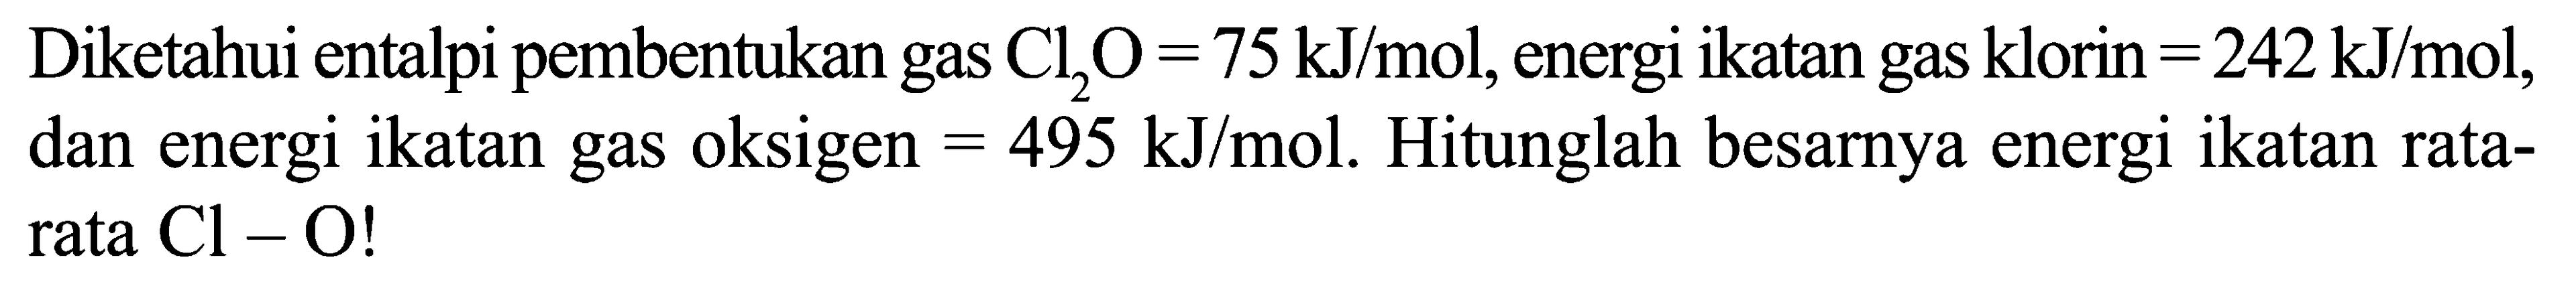 Diketahui entalpi pembentukan gas Cl2O = 75 kJ/mol, energi ikatan gas klorin = 242 kJ/mol, dan energi ikatan gas oksigen = 495 kJ/mol. Hitunglah besarnya energi ikatan rata-rata Cl - O!